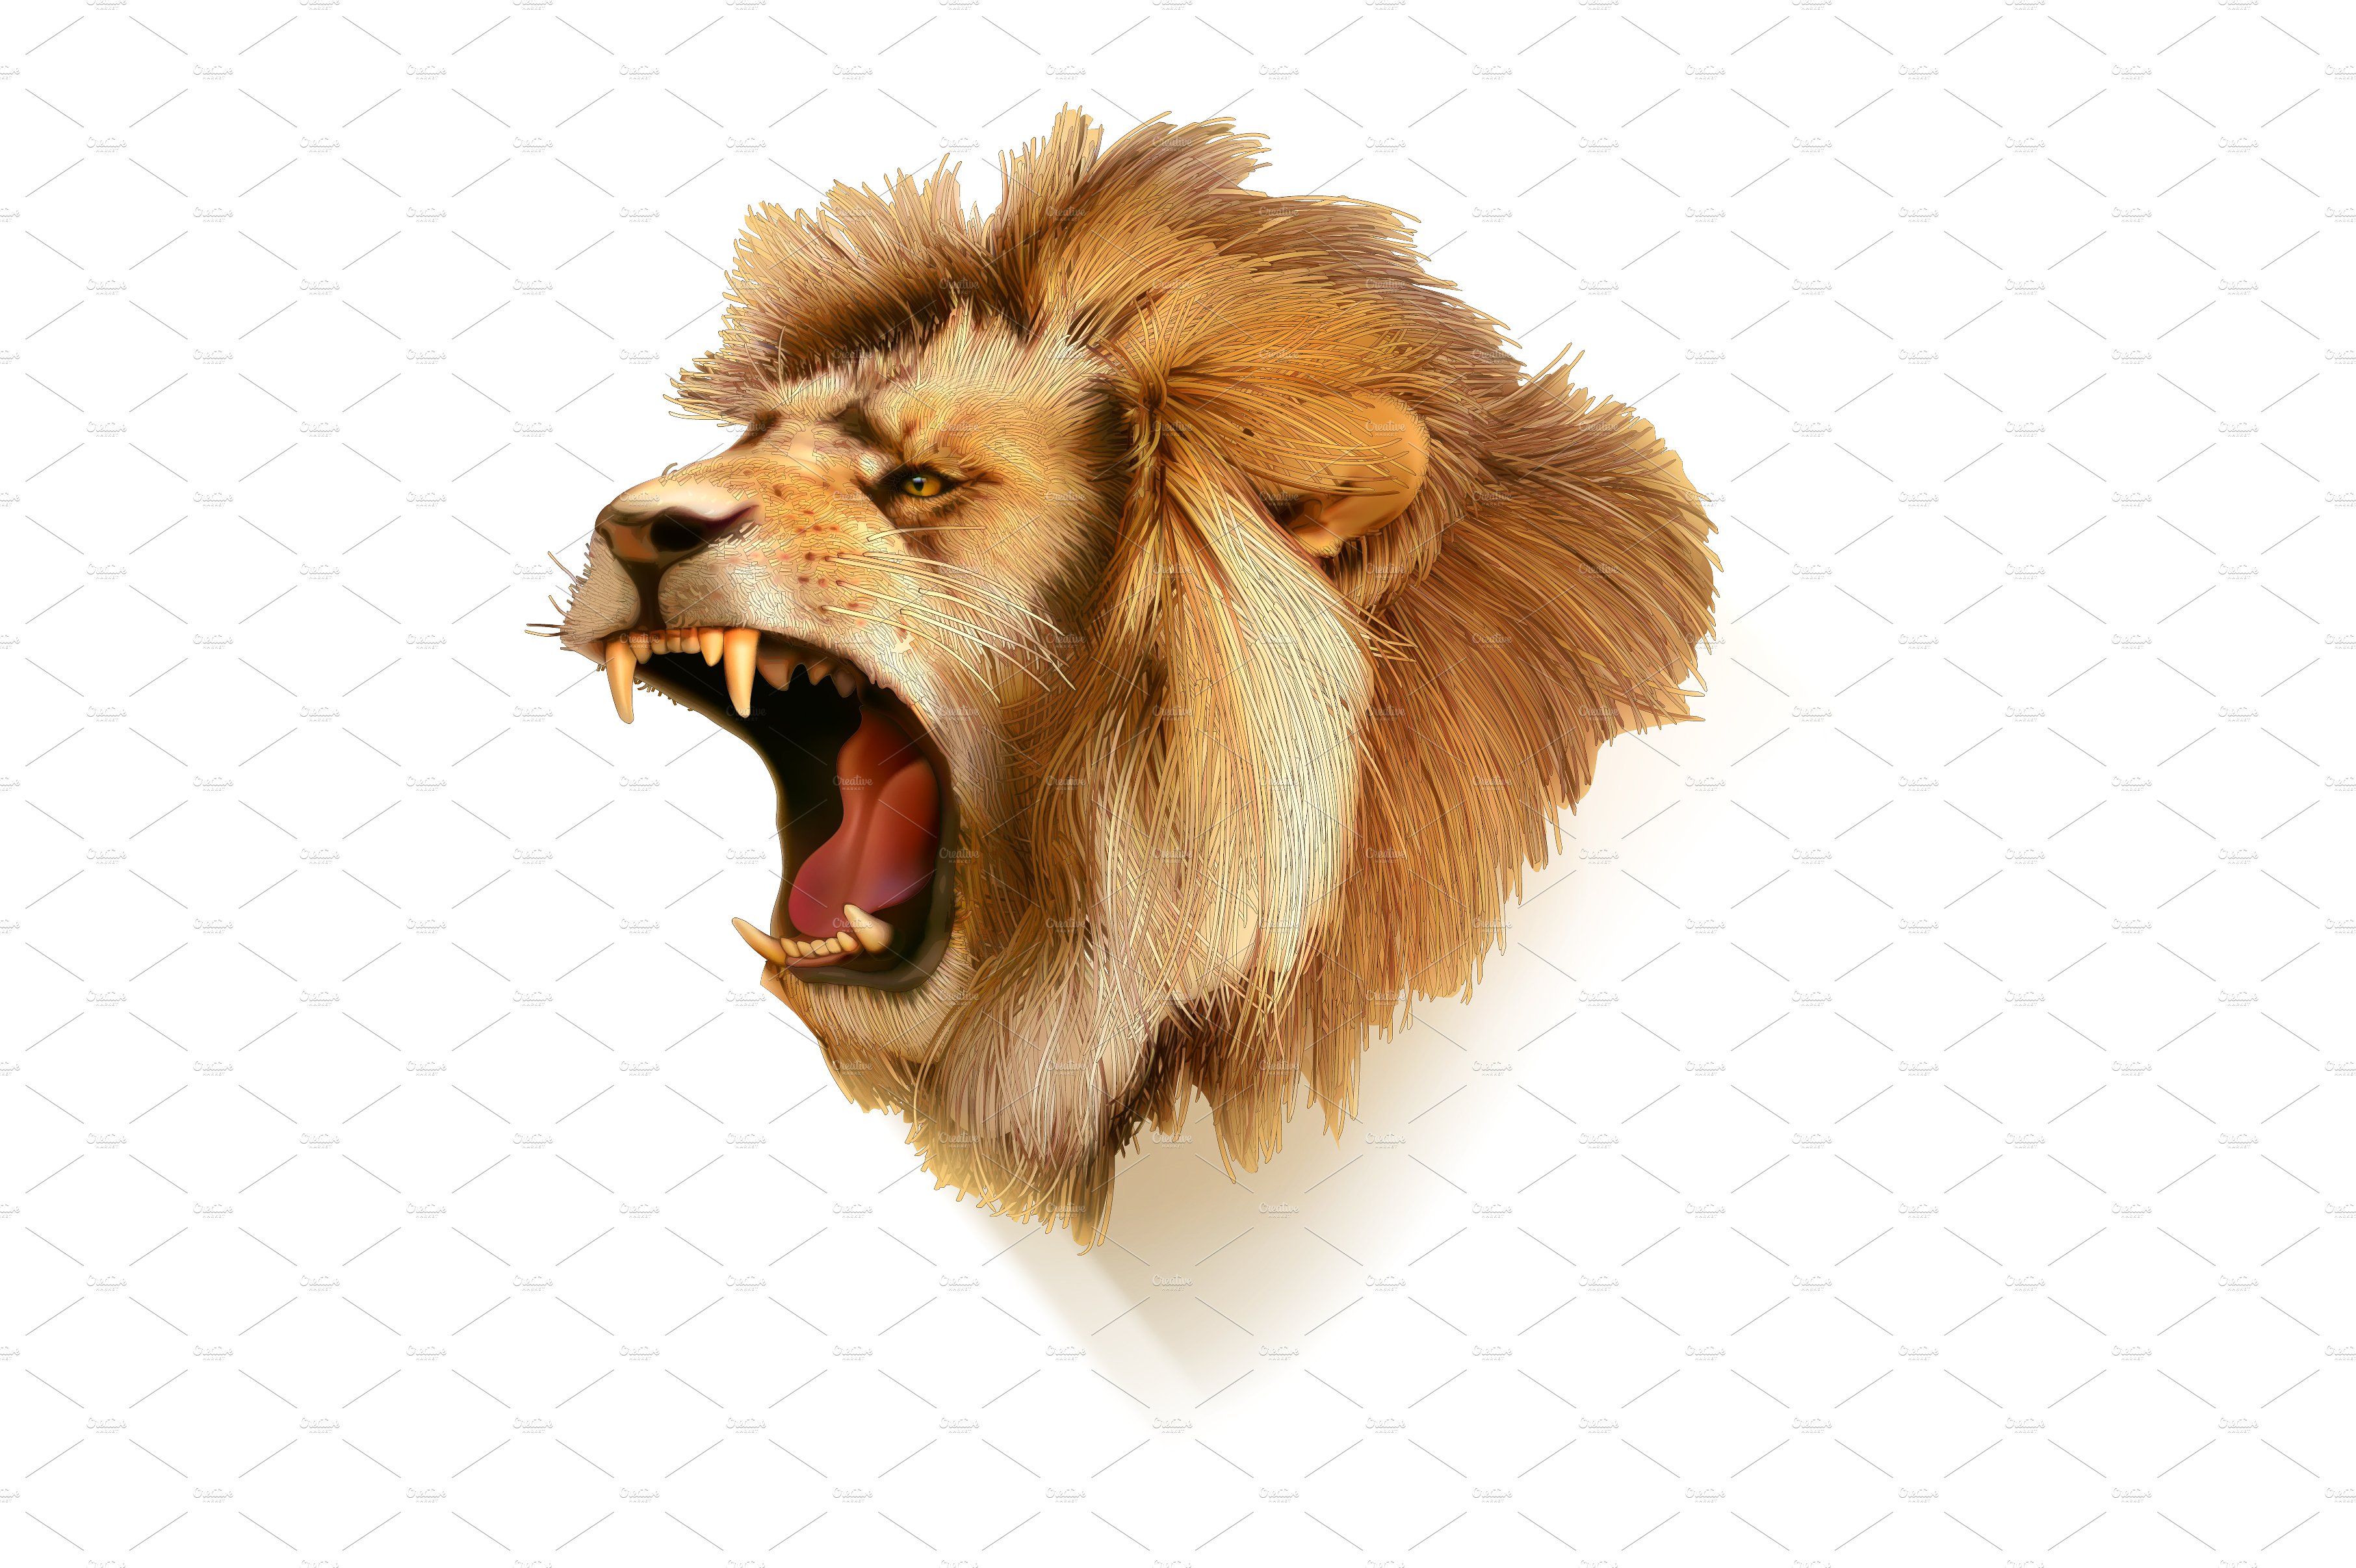 Roaring lion icon ~ Icons ~ Creative Market